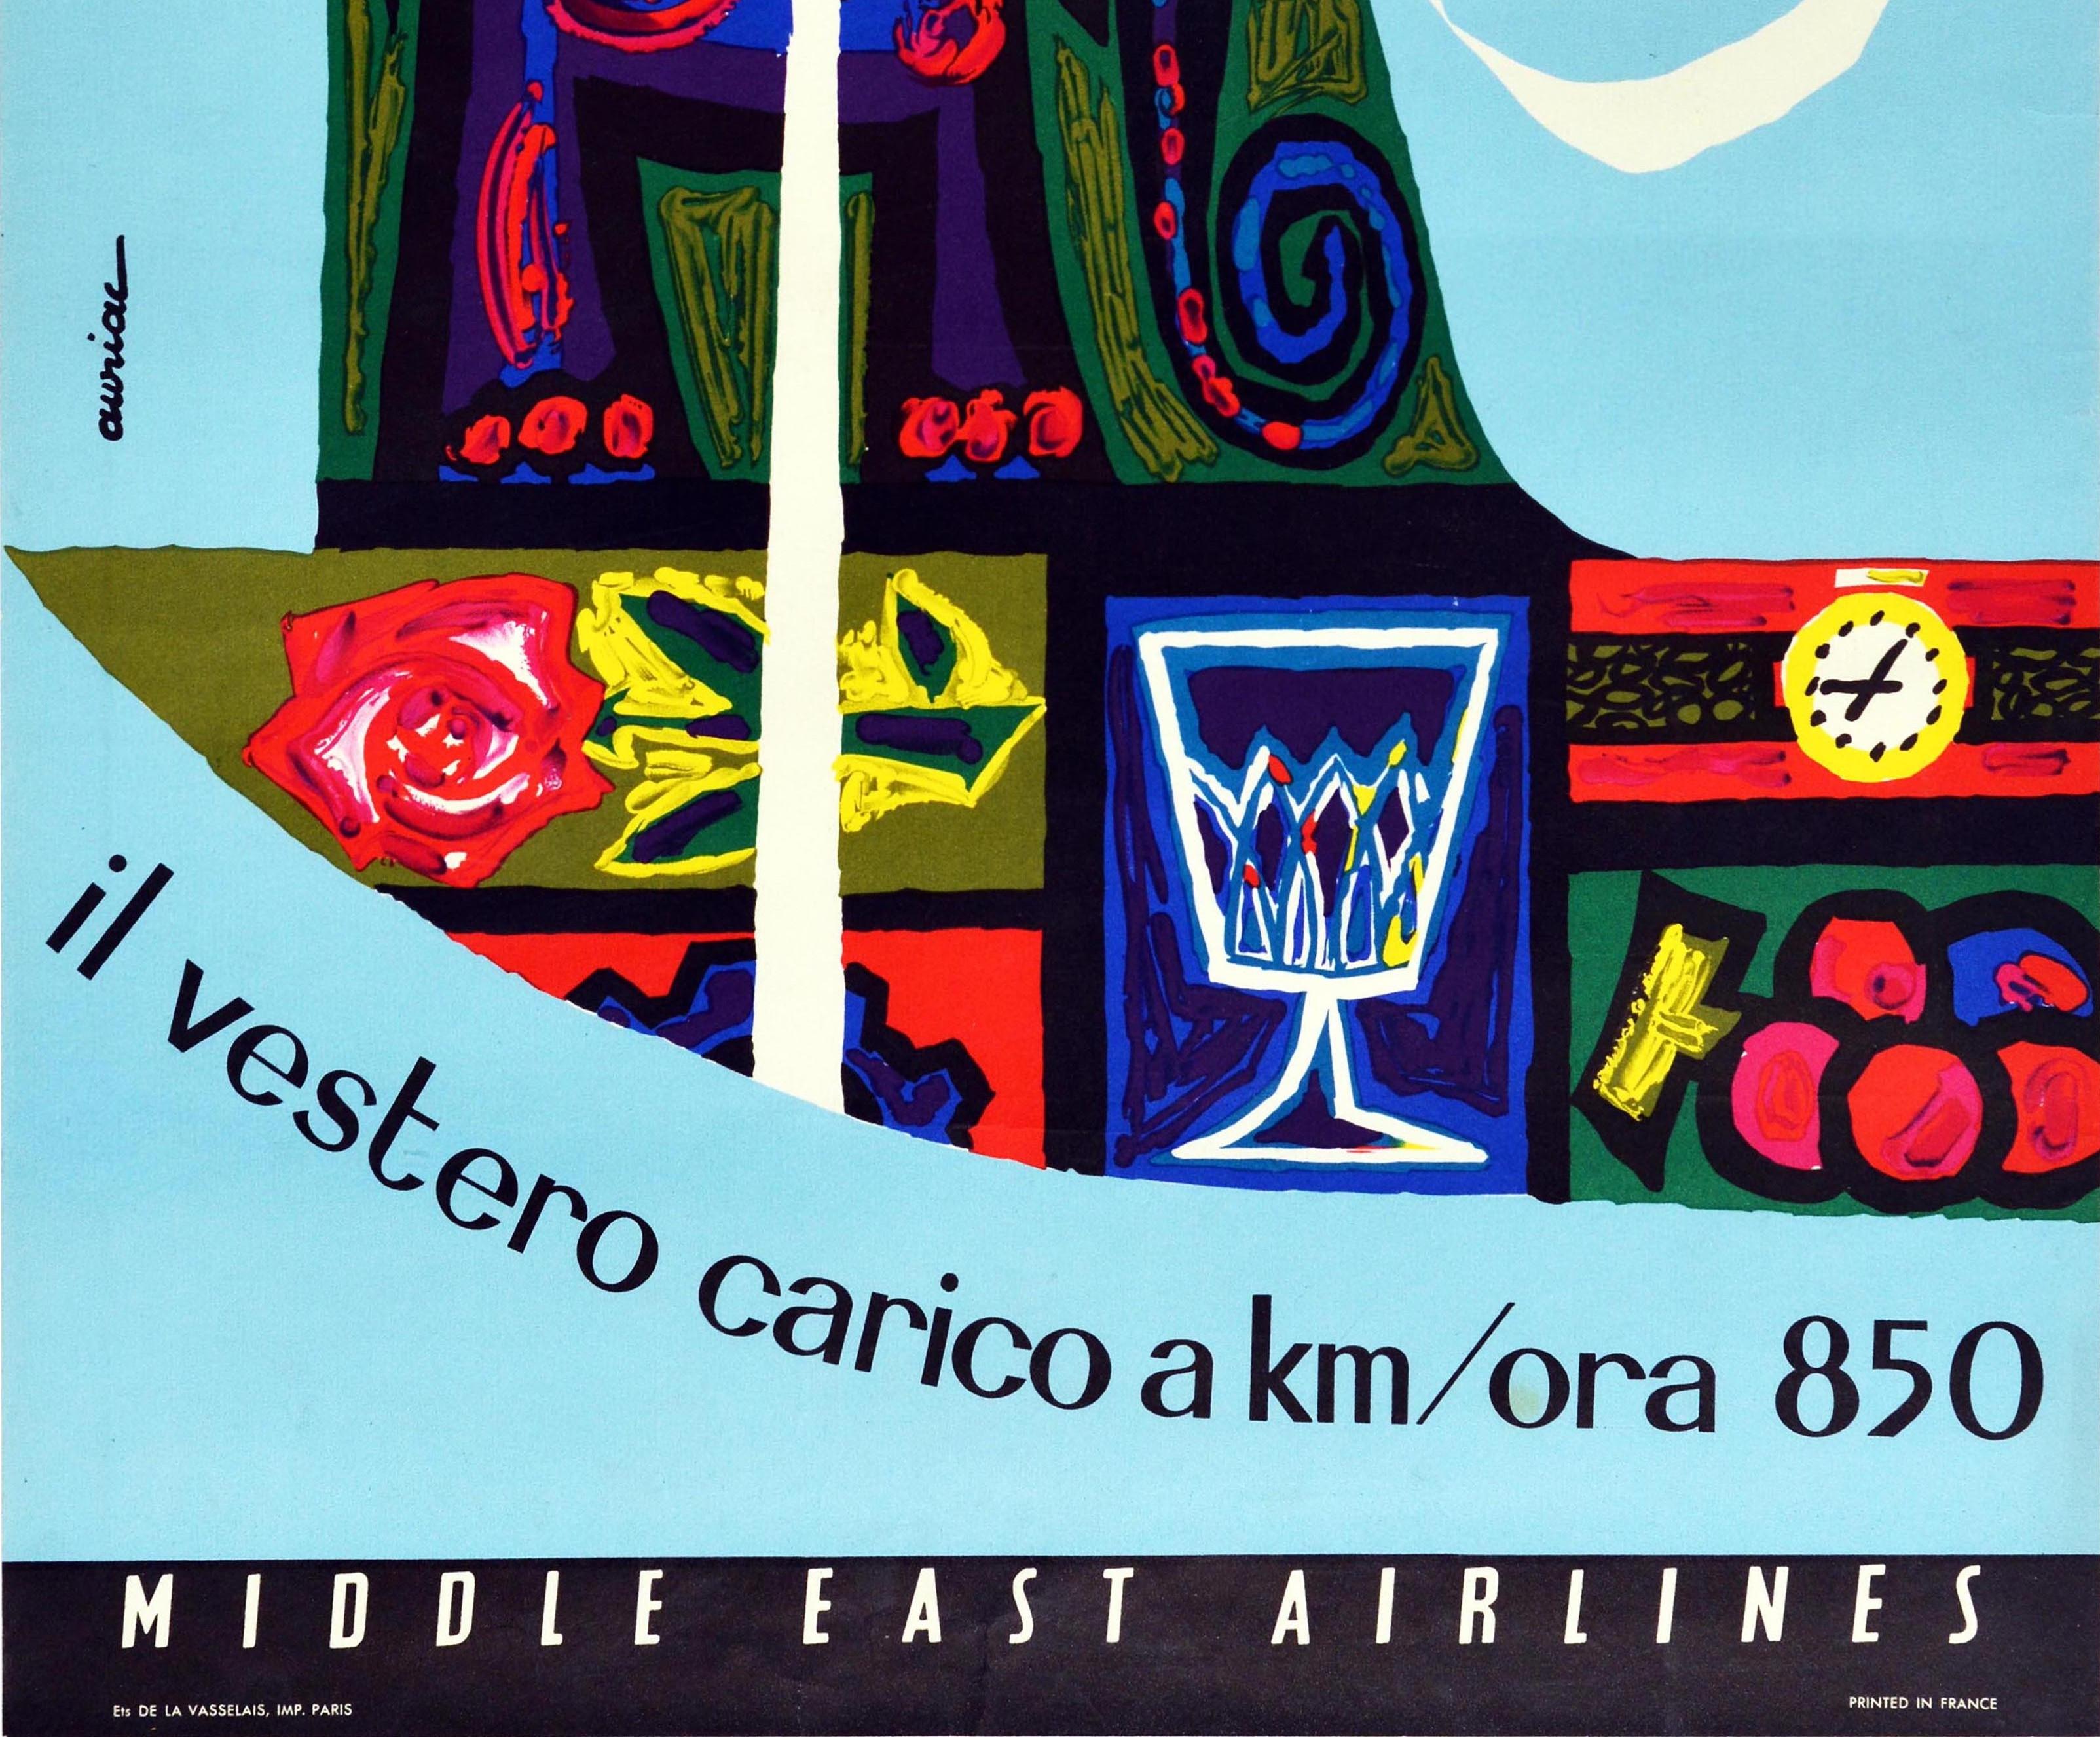 Original-Vintage-Werbeplakat Middle East Airlines MEA Cargoflugzeug 850 Meilen/h (Blau), Print, von Jacques Auriac